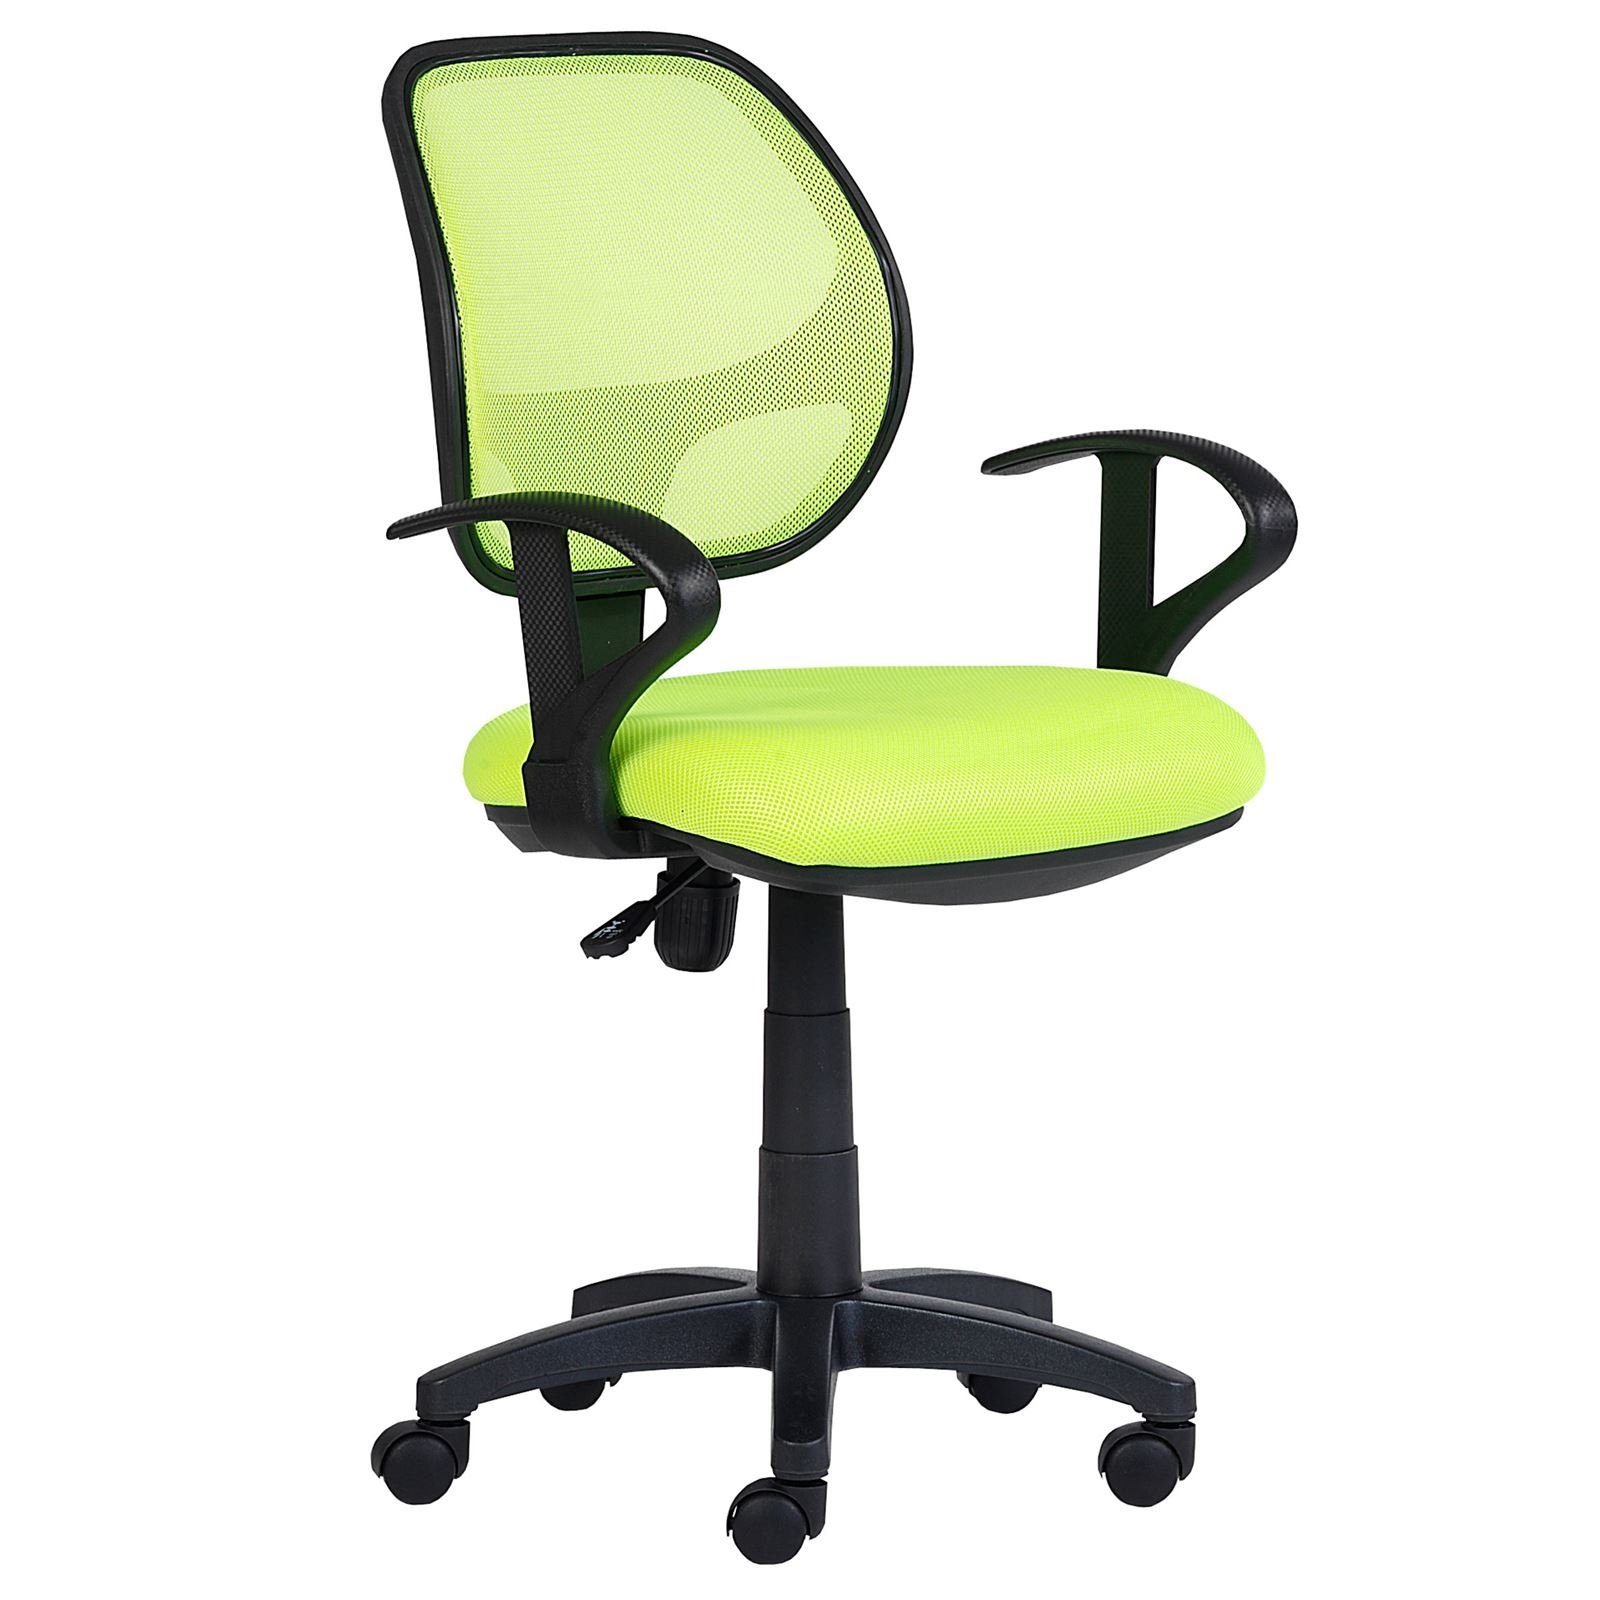 grün Drehstuhl IDIMEX atmungsaktiver Bezug Schreibtischstuhl Farba Kinderdrehstuhl Drehstuhl COOL,